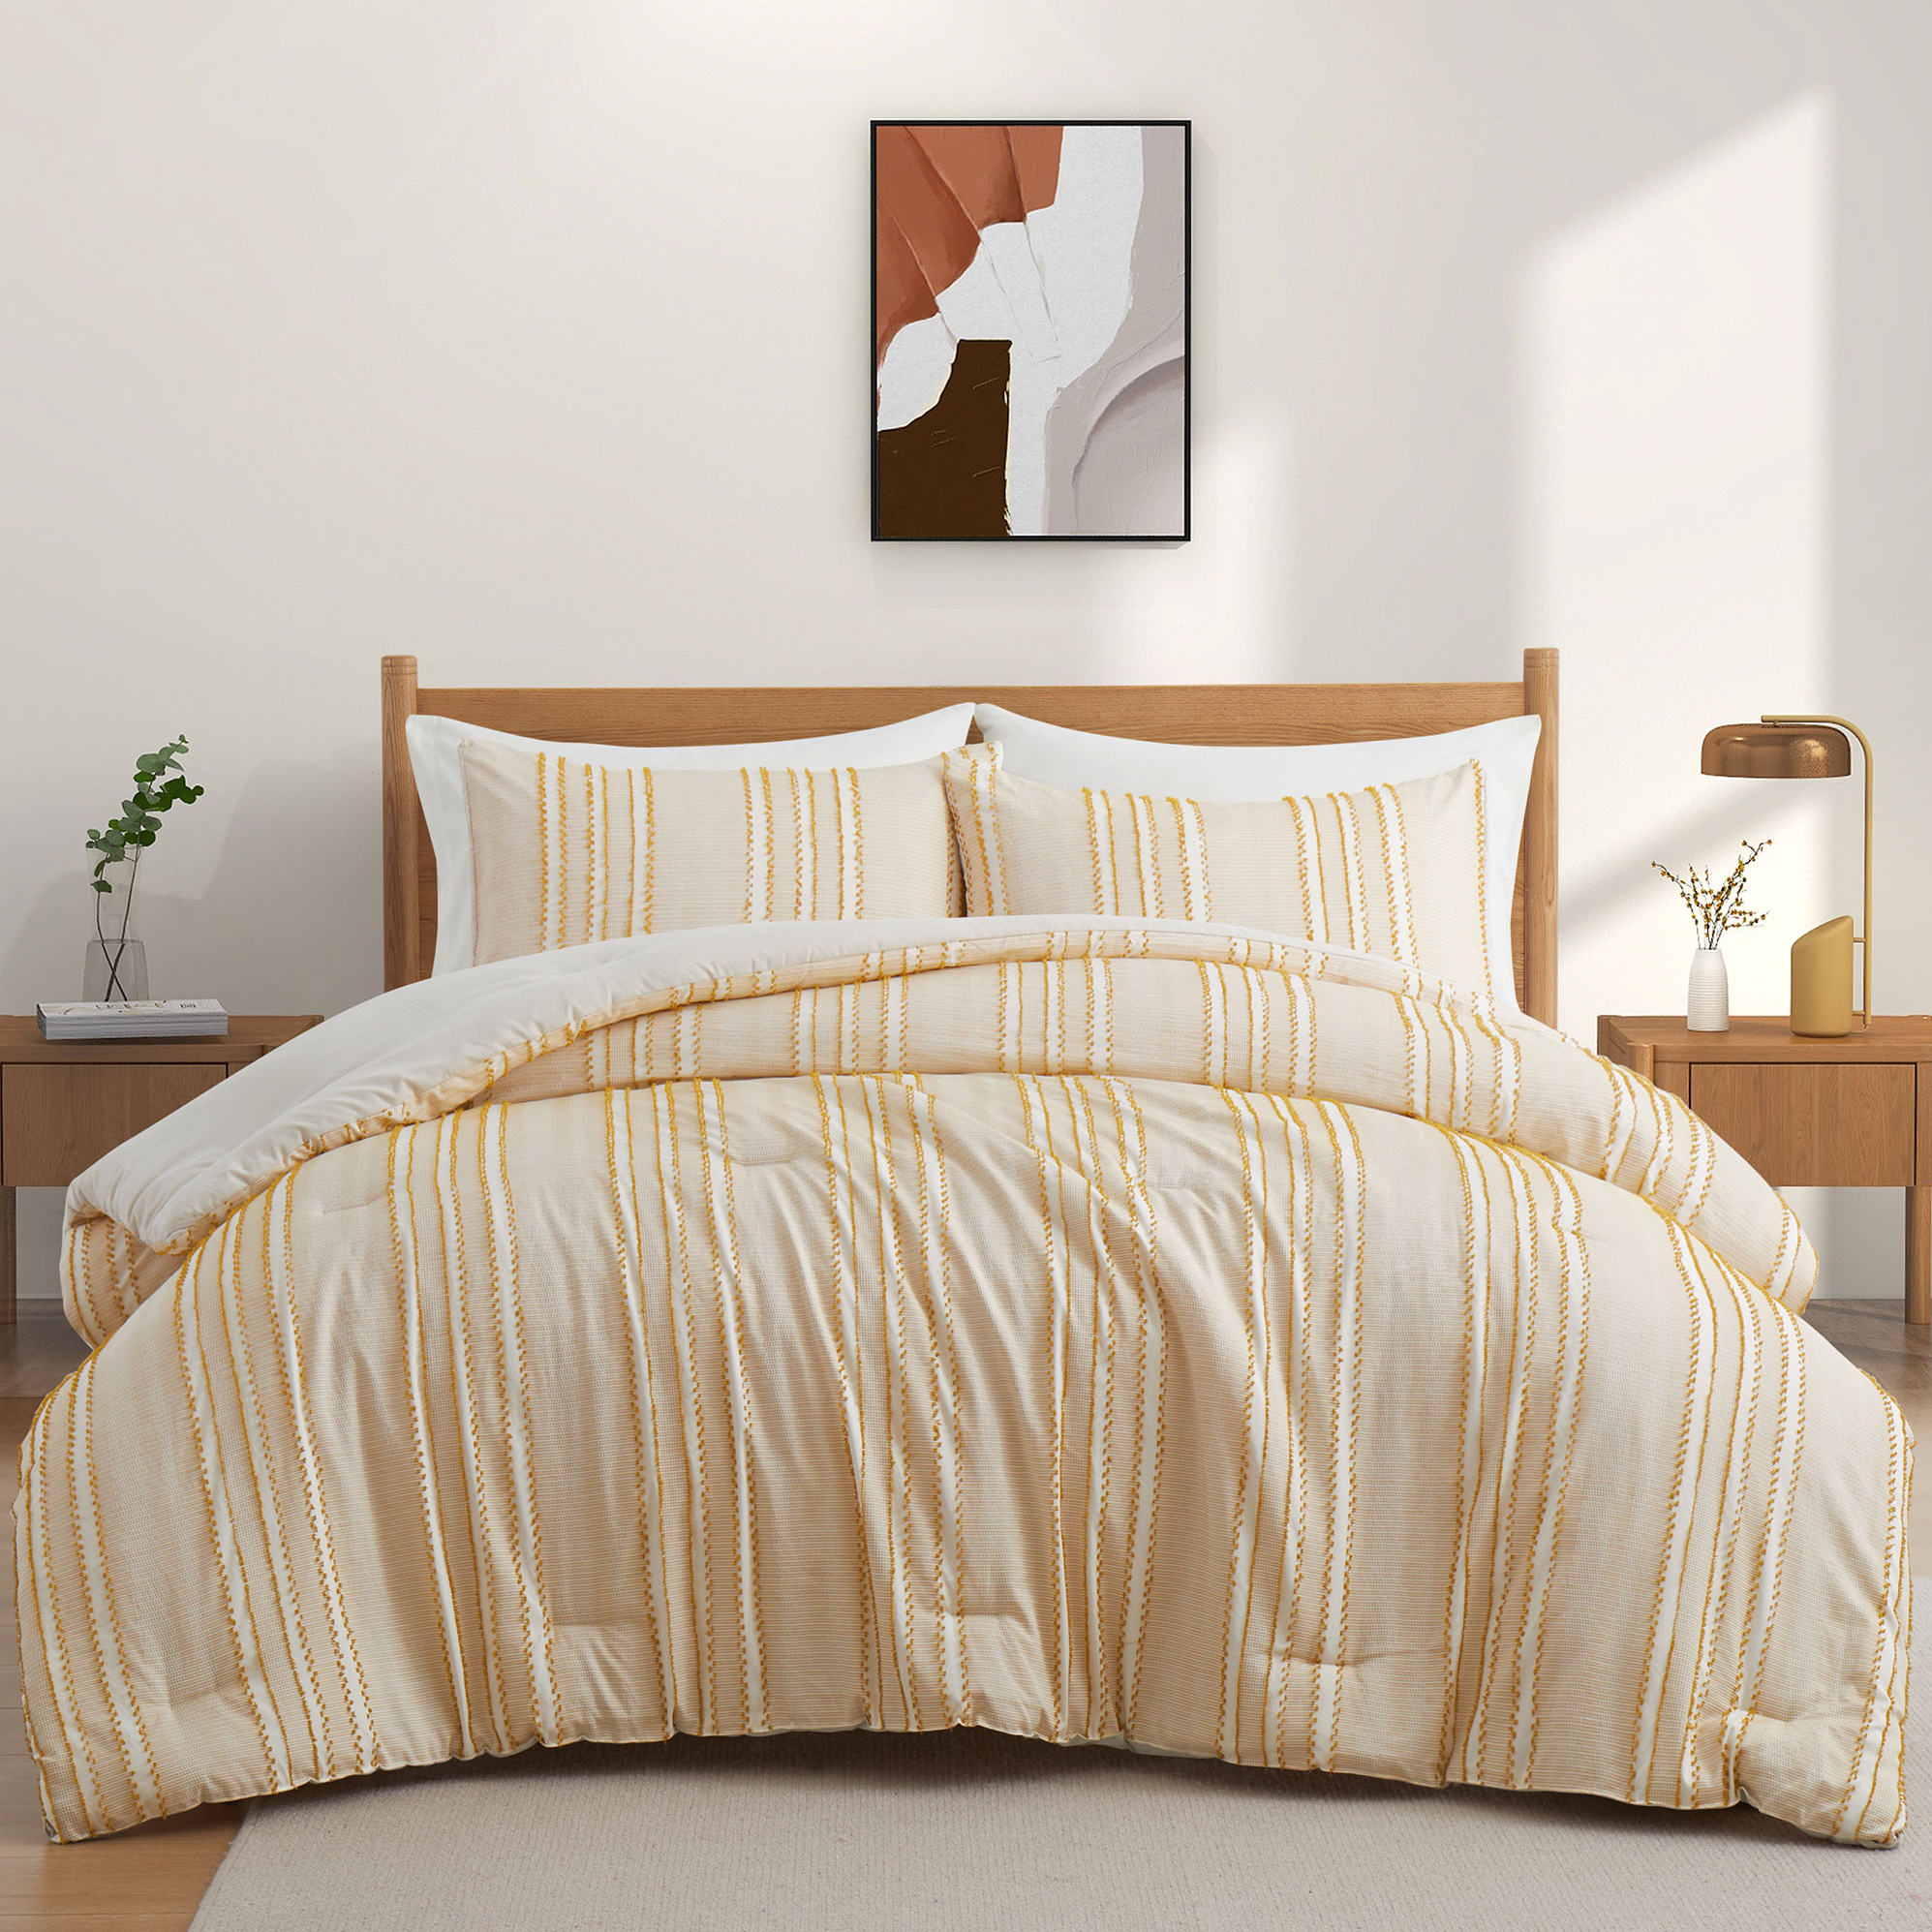 Premium 3 Piece Soft Microfiber Clipped All Season Comforter Set - Cozy Bedding Ensemble - King